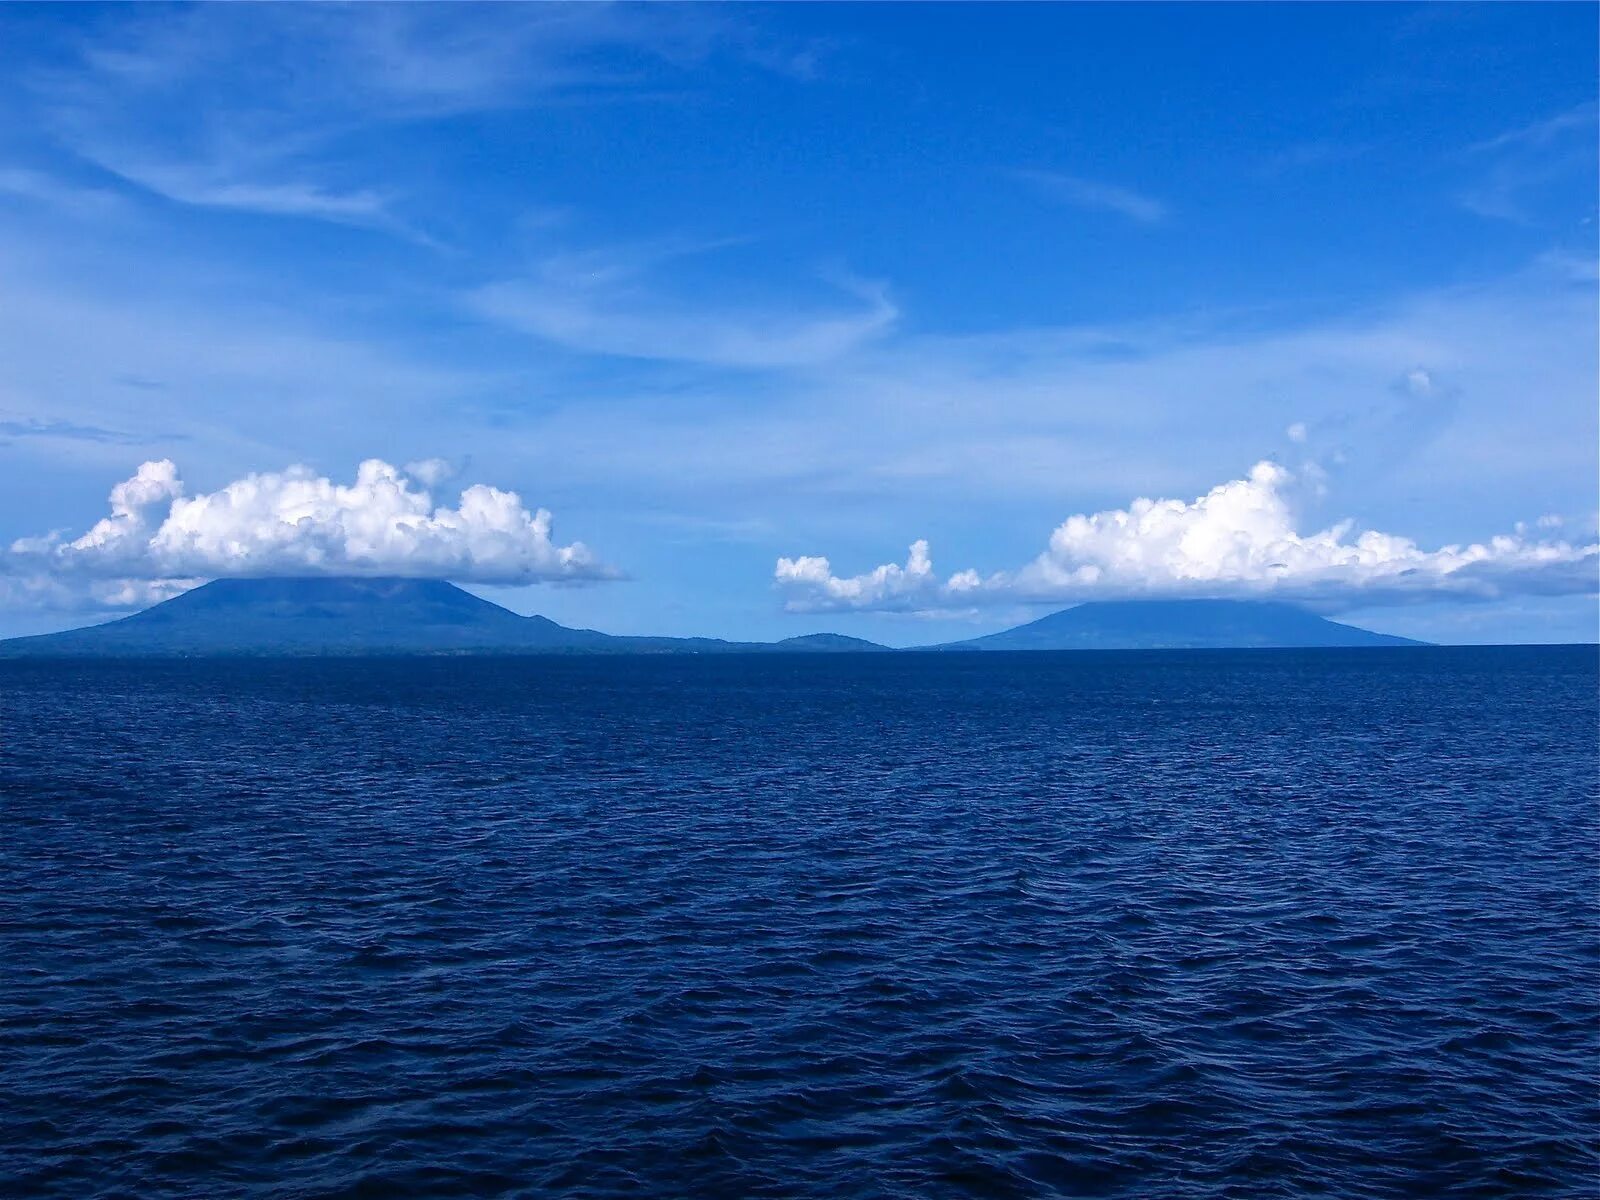 Большое озеро в латинской америке. Озеро Никарагуа. Озеро Манагуа. Котловина озера Никарагуа. Озеро Никарагуа в Северной Америке.